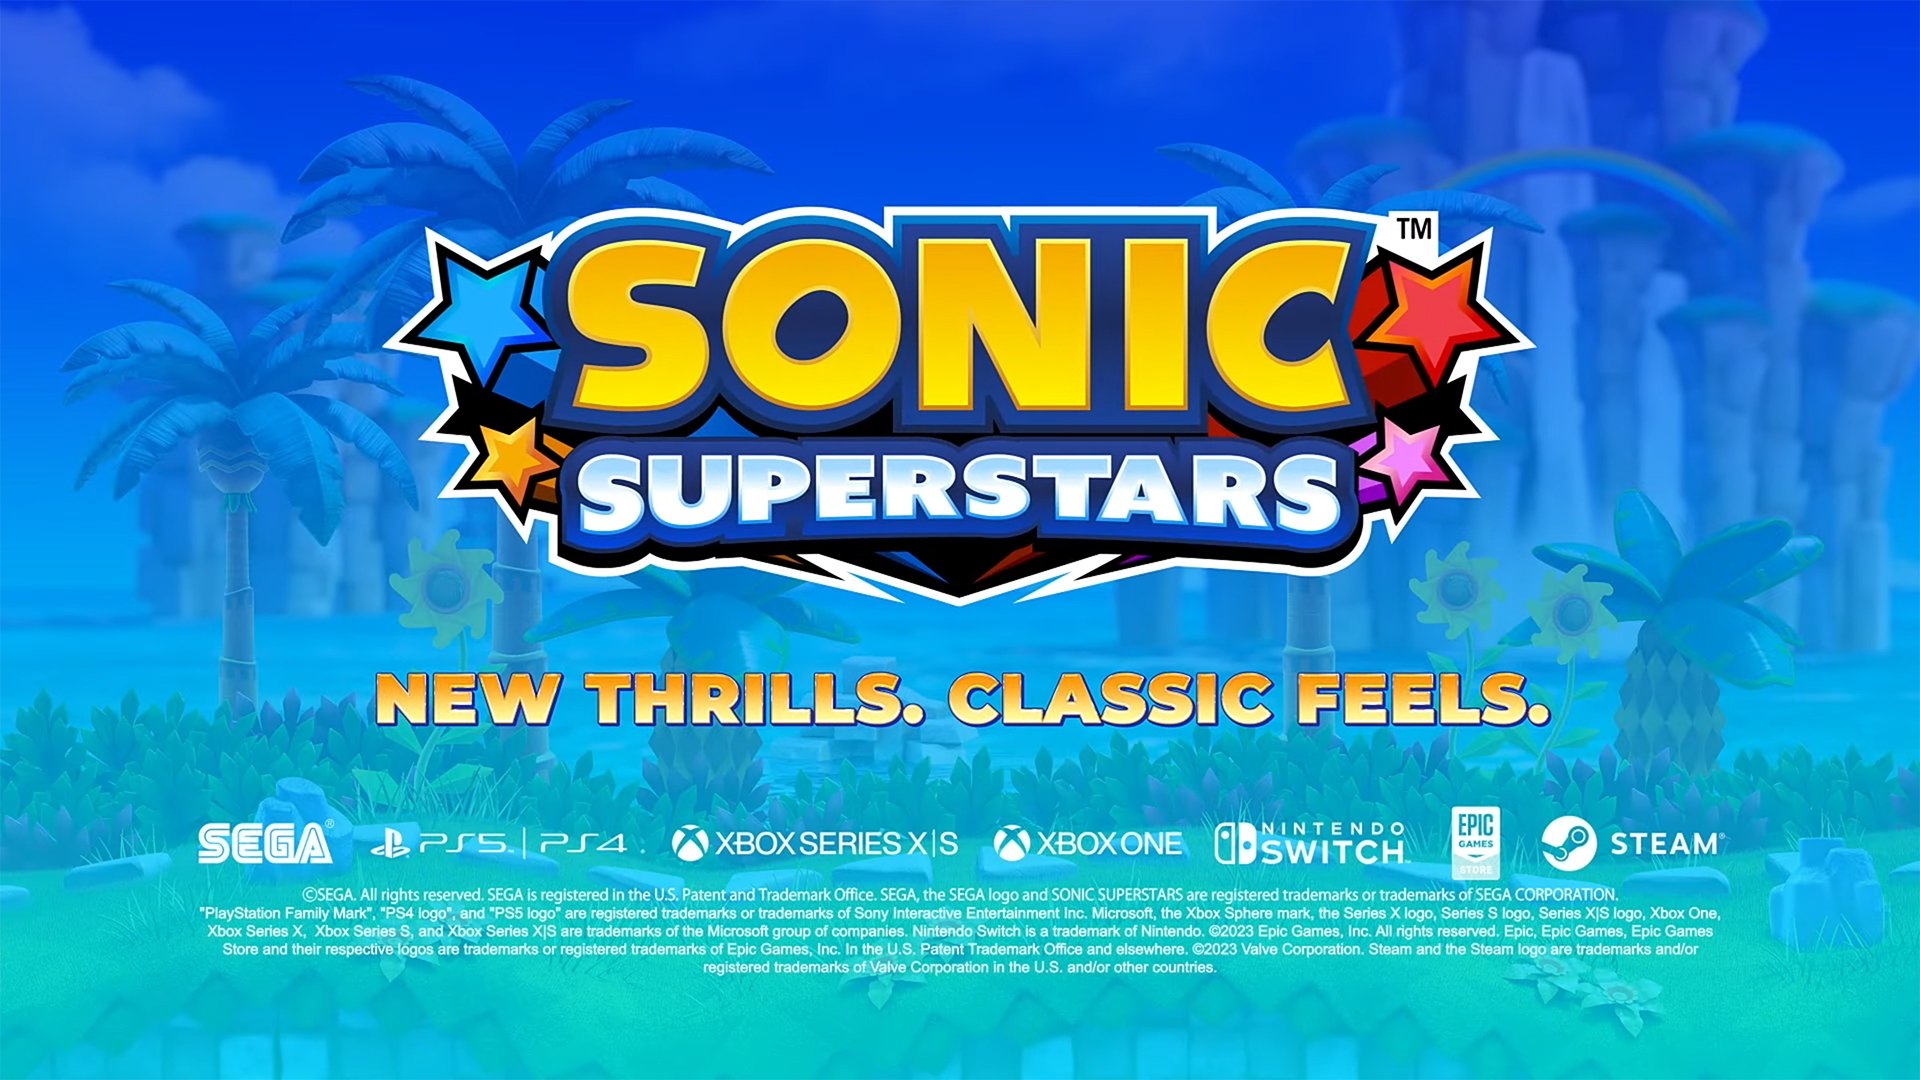 Sonic Superstars is developed by original designer’s studio, Sega confirms